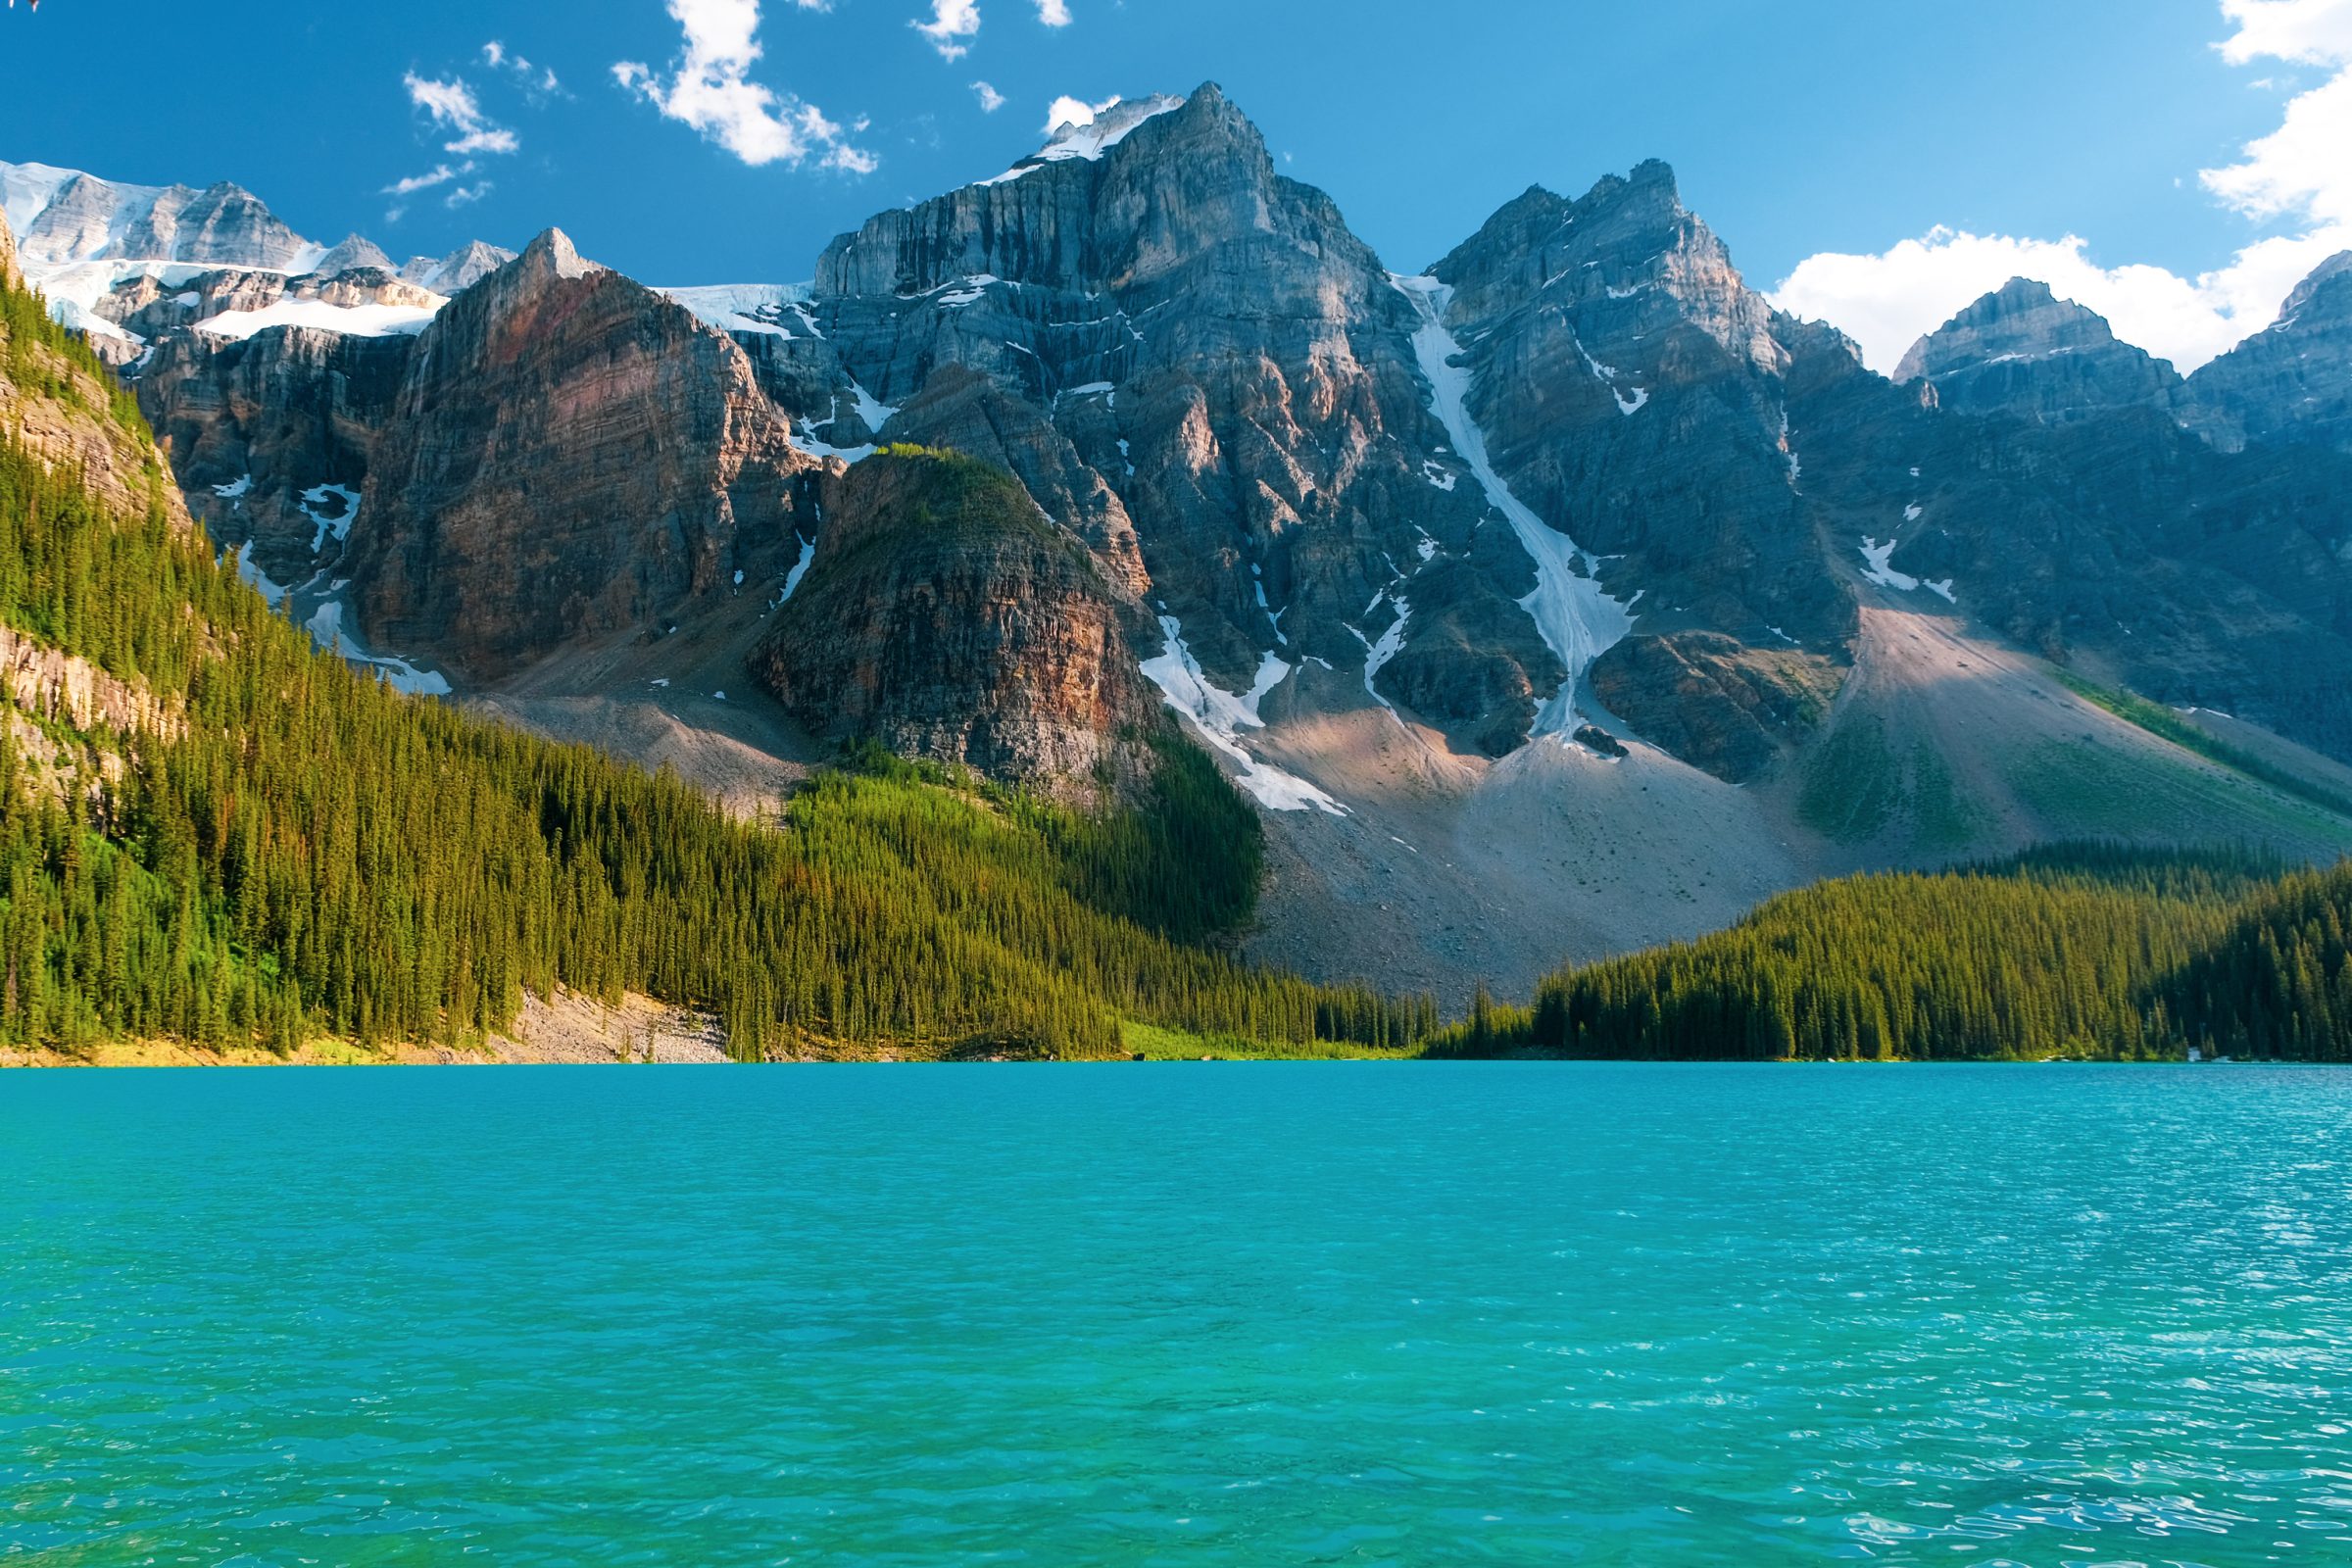 Een foto van Banff National Park in hoogwaardige kwaliteit in WebP formaat. Slechts 400Kb m.b.v. WebP en Imagify. Klik om uit te vergroten.